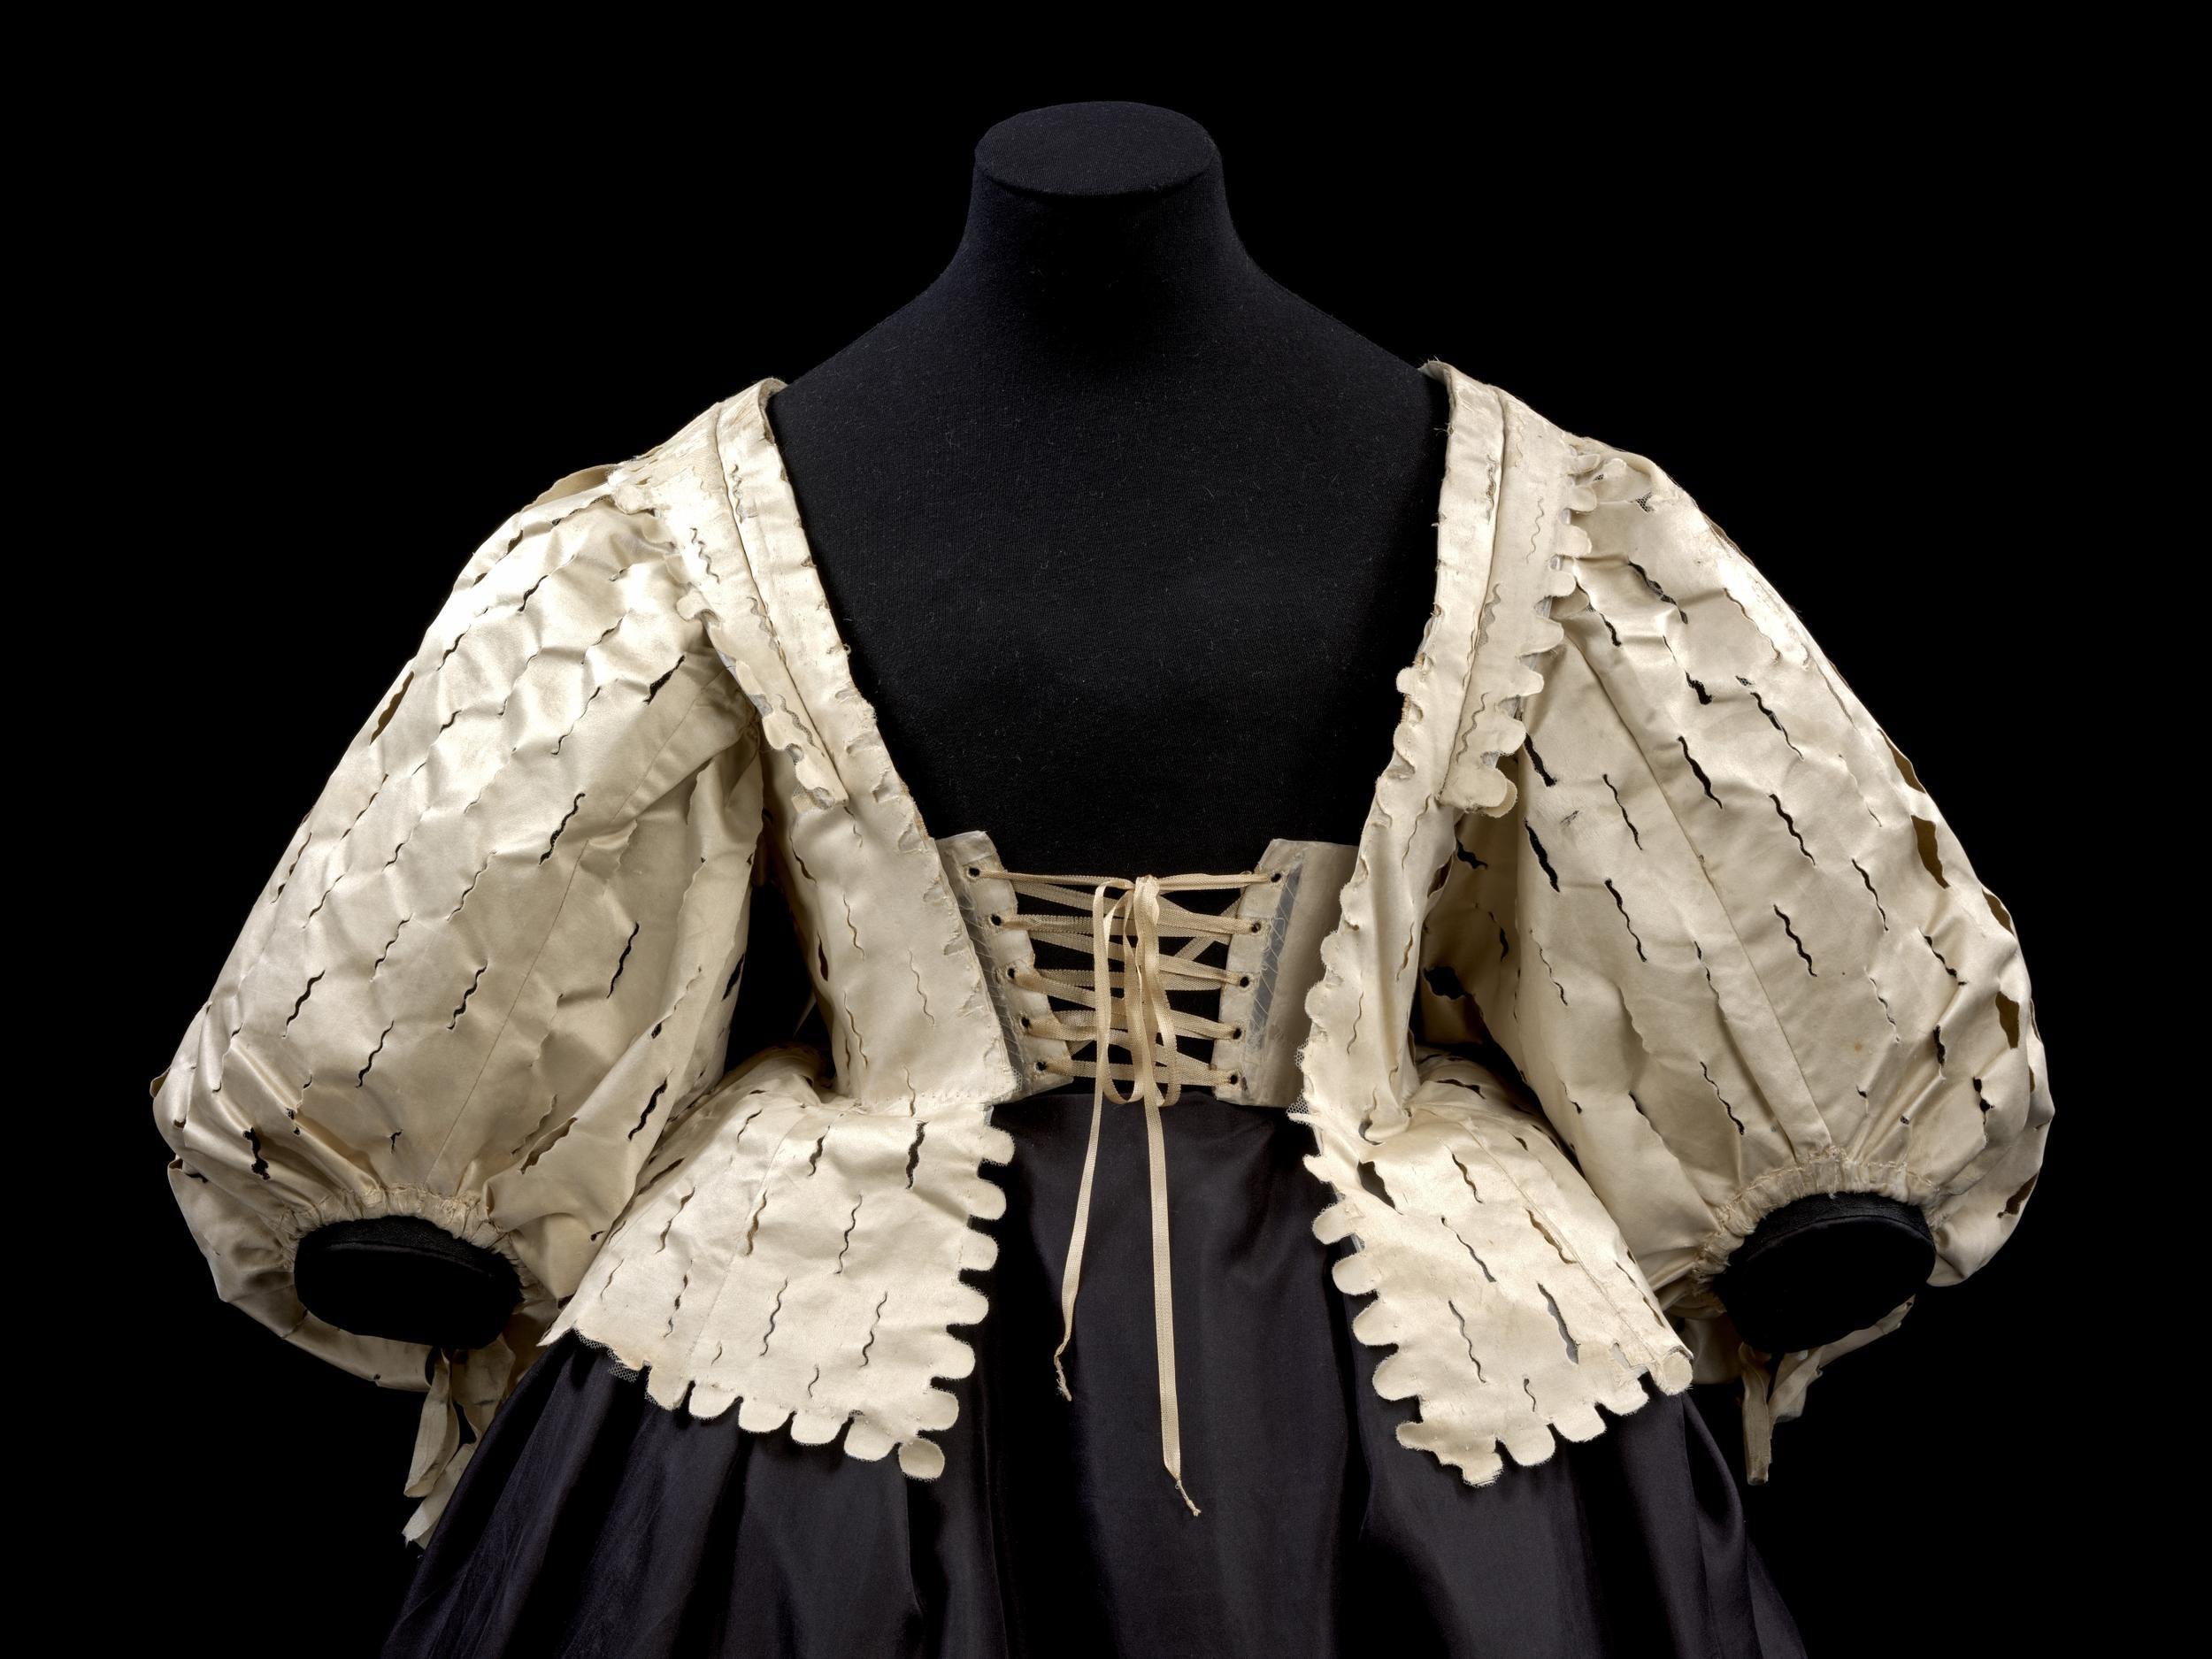 17 century. Платье Котт Франция 16 век. Франция одежда XVI век 16 век. Эпоха Барокко 17 век Франция одежда женская. Платье Котт 16 век Англия.